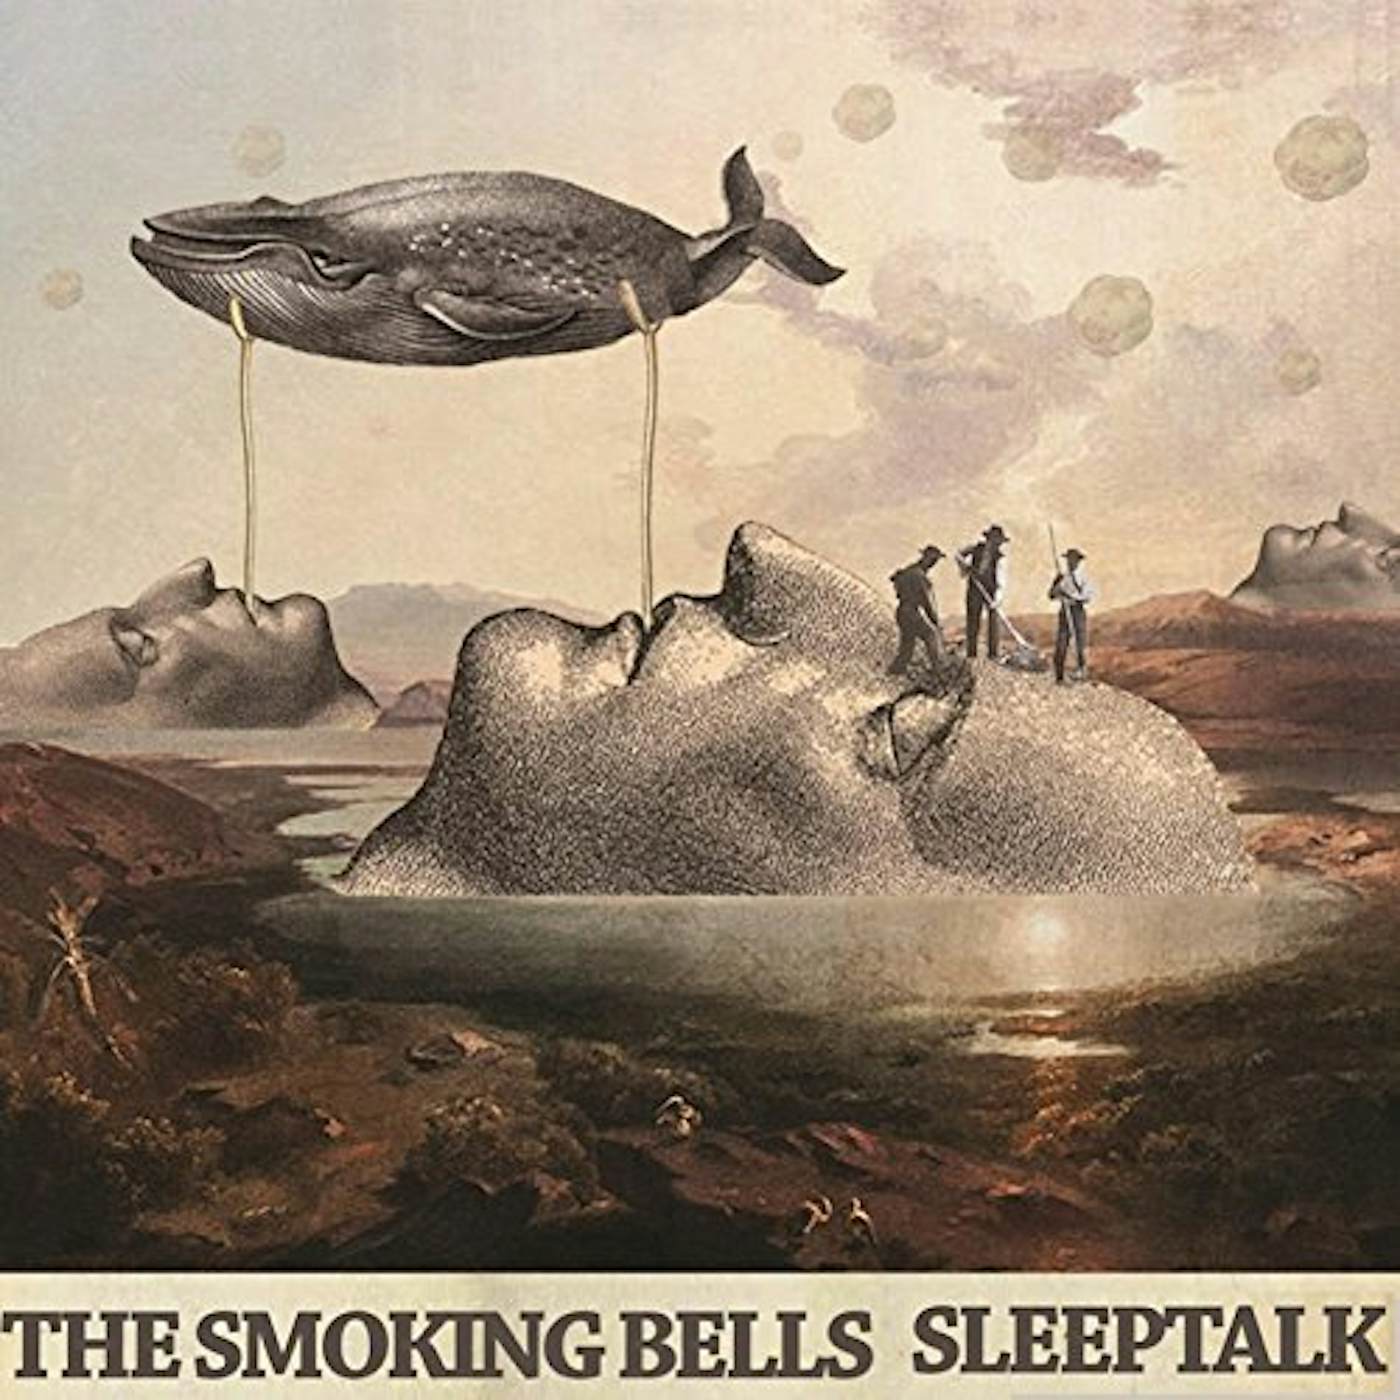 The Smoking Bells Sleeptalk Vinyl Record